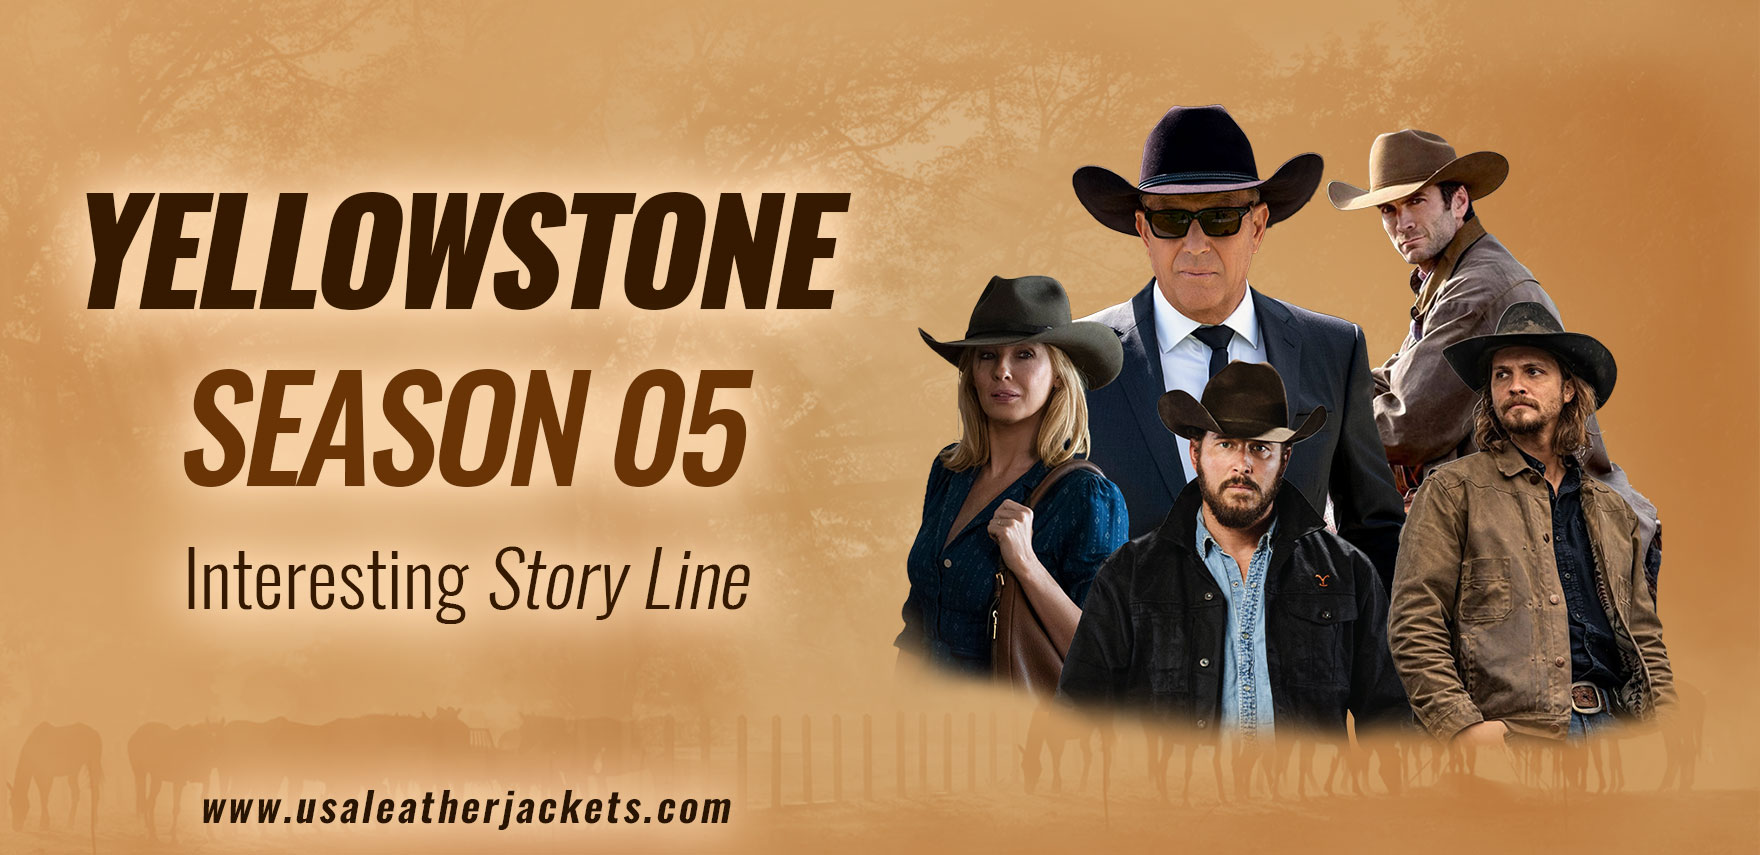 yellowstone-story-line-seasons